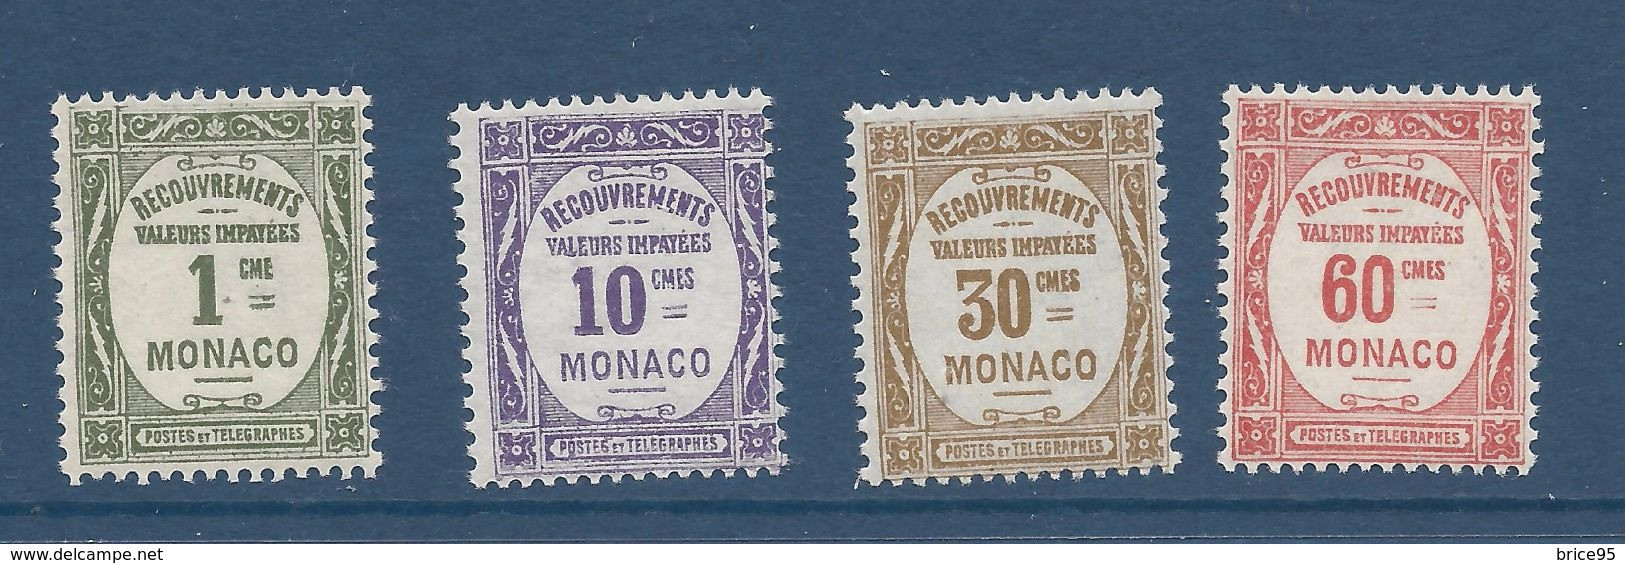 Monaco - Taxe - YT N° 13 à 16 * - Neuf Avec Charnière - 1924 à 1932 - Ungebraucht